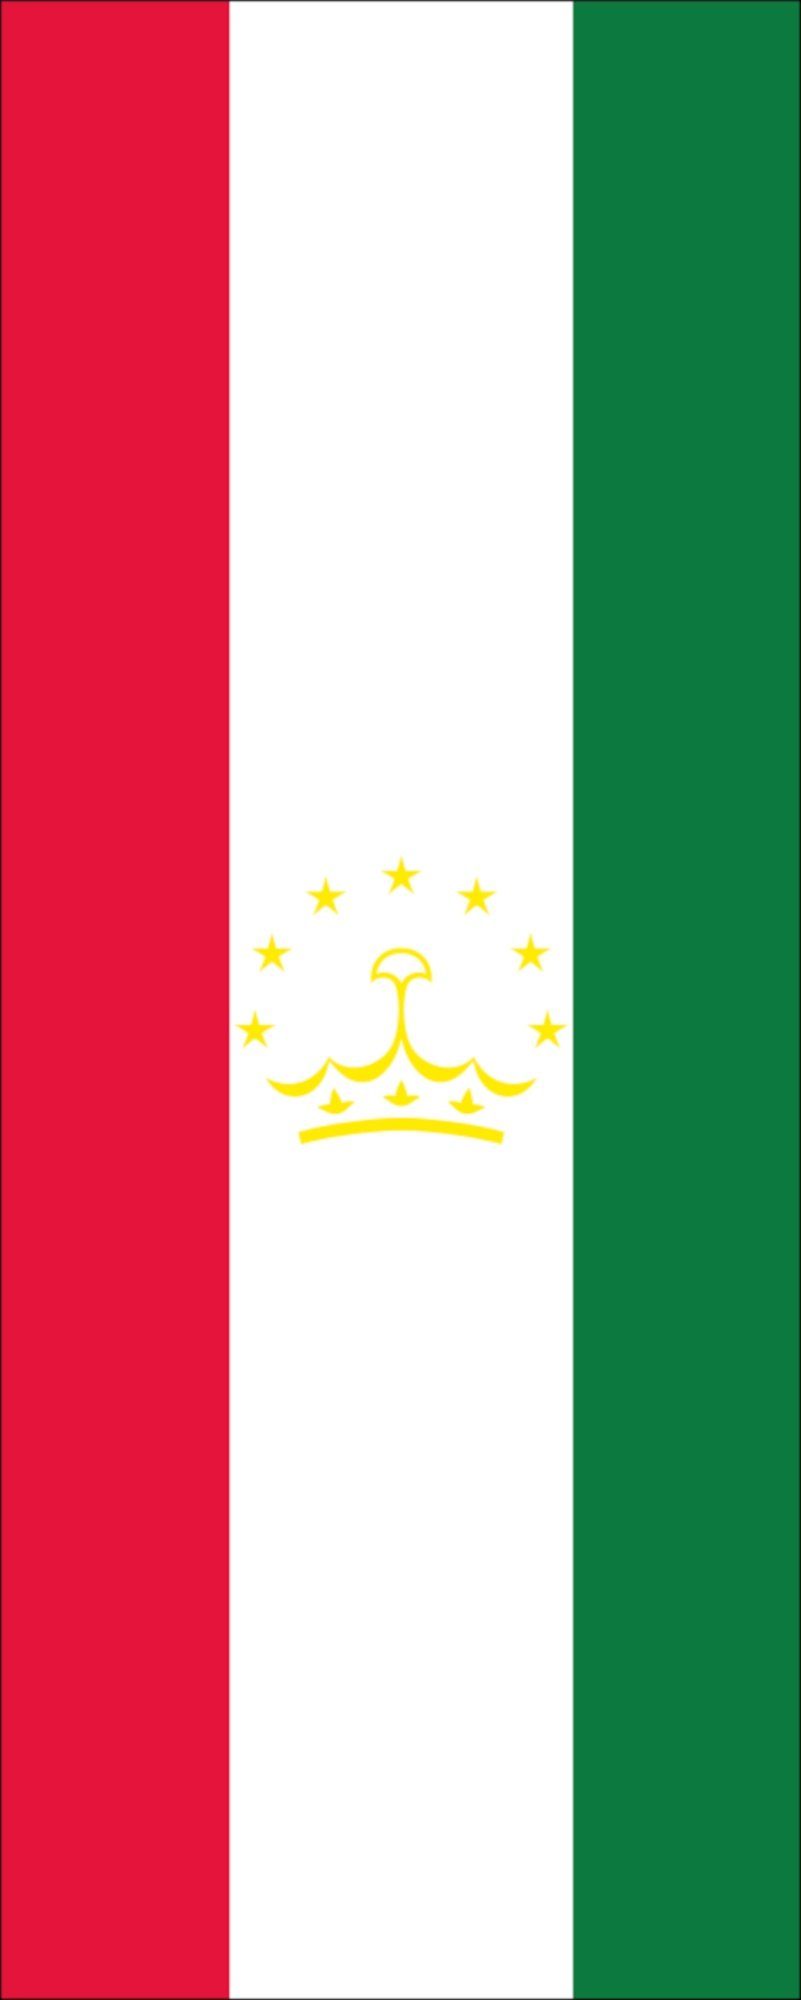 Flagge Flagge g/m² Tadschikistan flaggenmeer 110 Hochformat